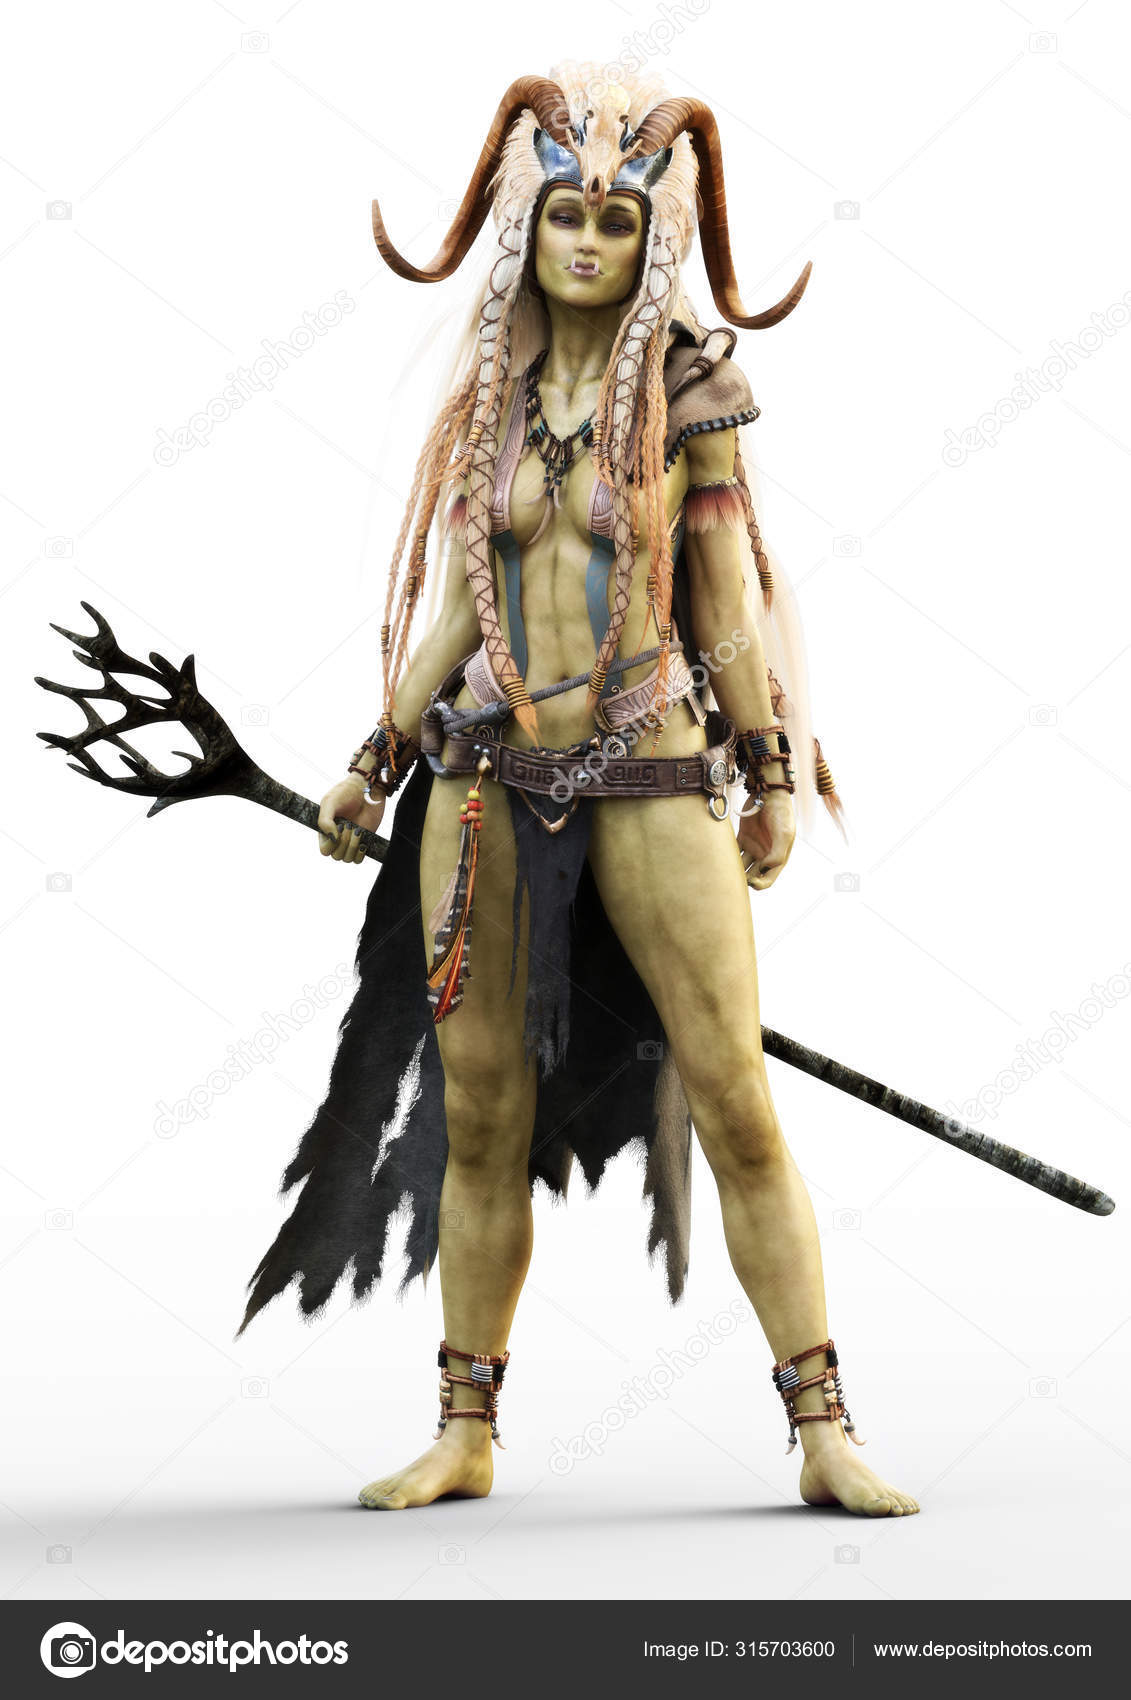 depositphotos_315703600-stock-photo-portrait-fantasy-female-orc-shaman.jpg